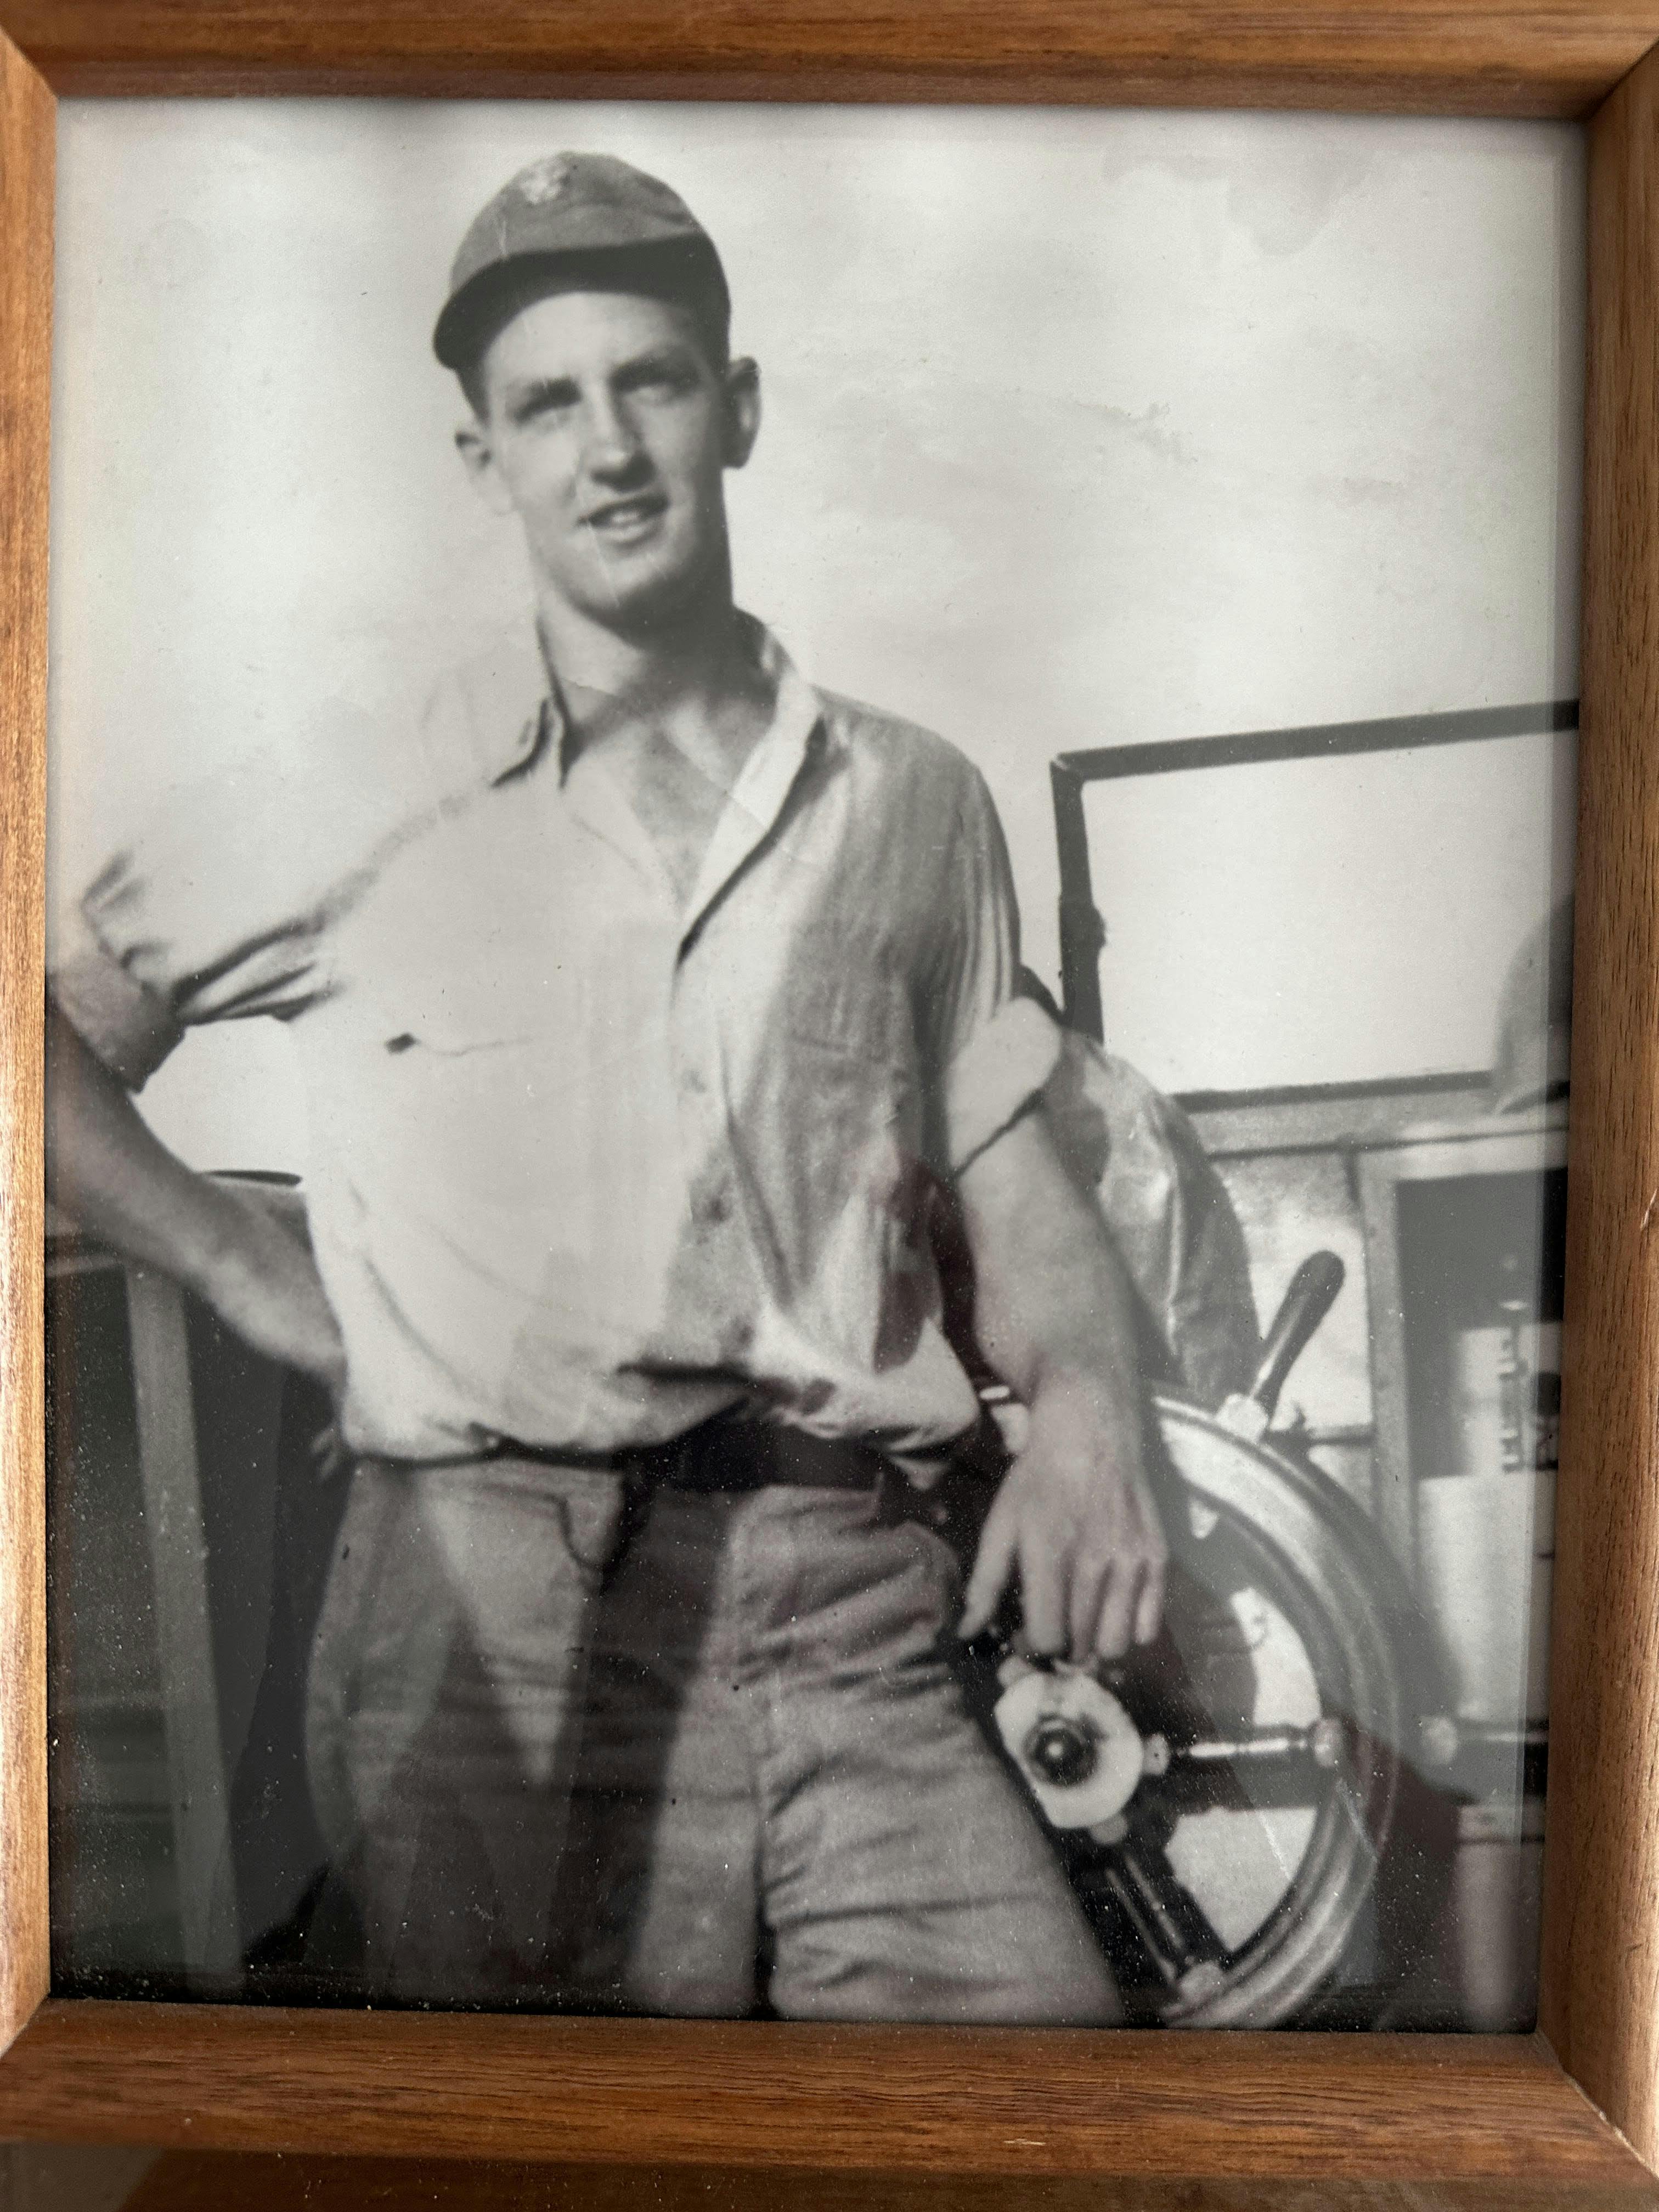 a photo of Arthur "Bud" Zwierlein in the Navy during World War II